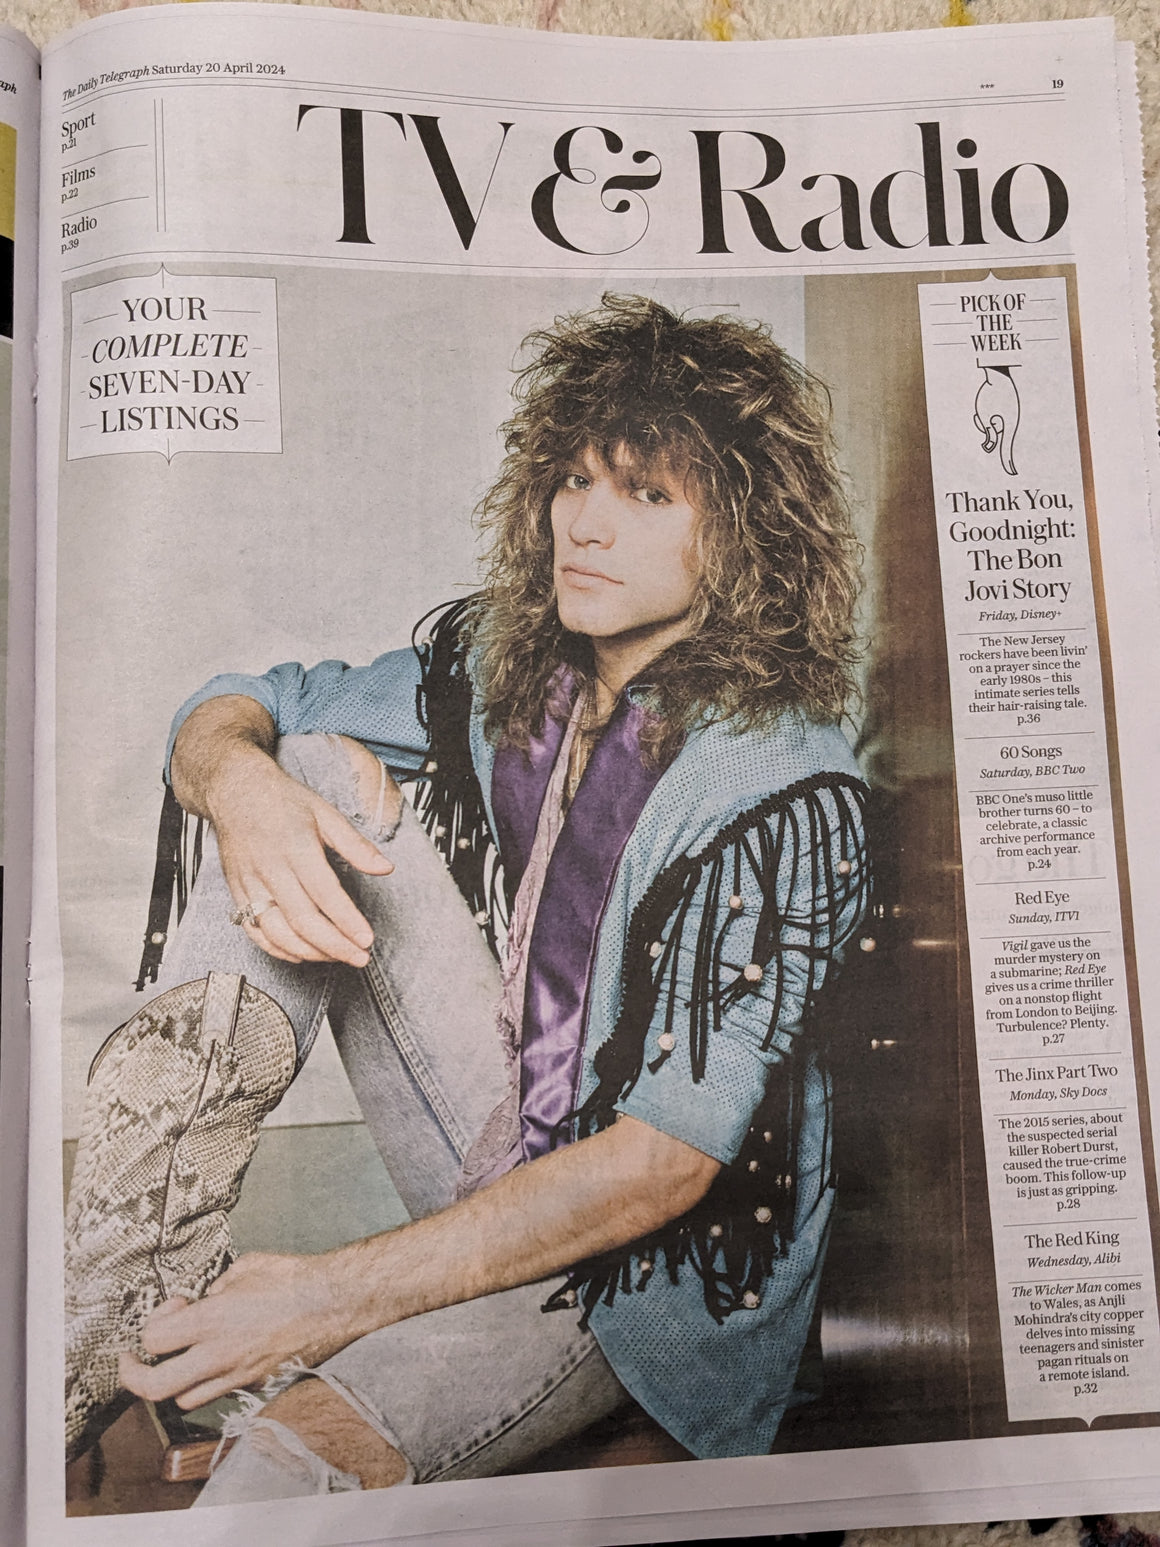 Telegraph Review 20/04/2024 Jon Bon Jovi St Vincent